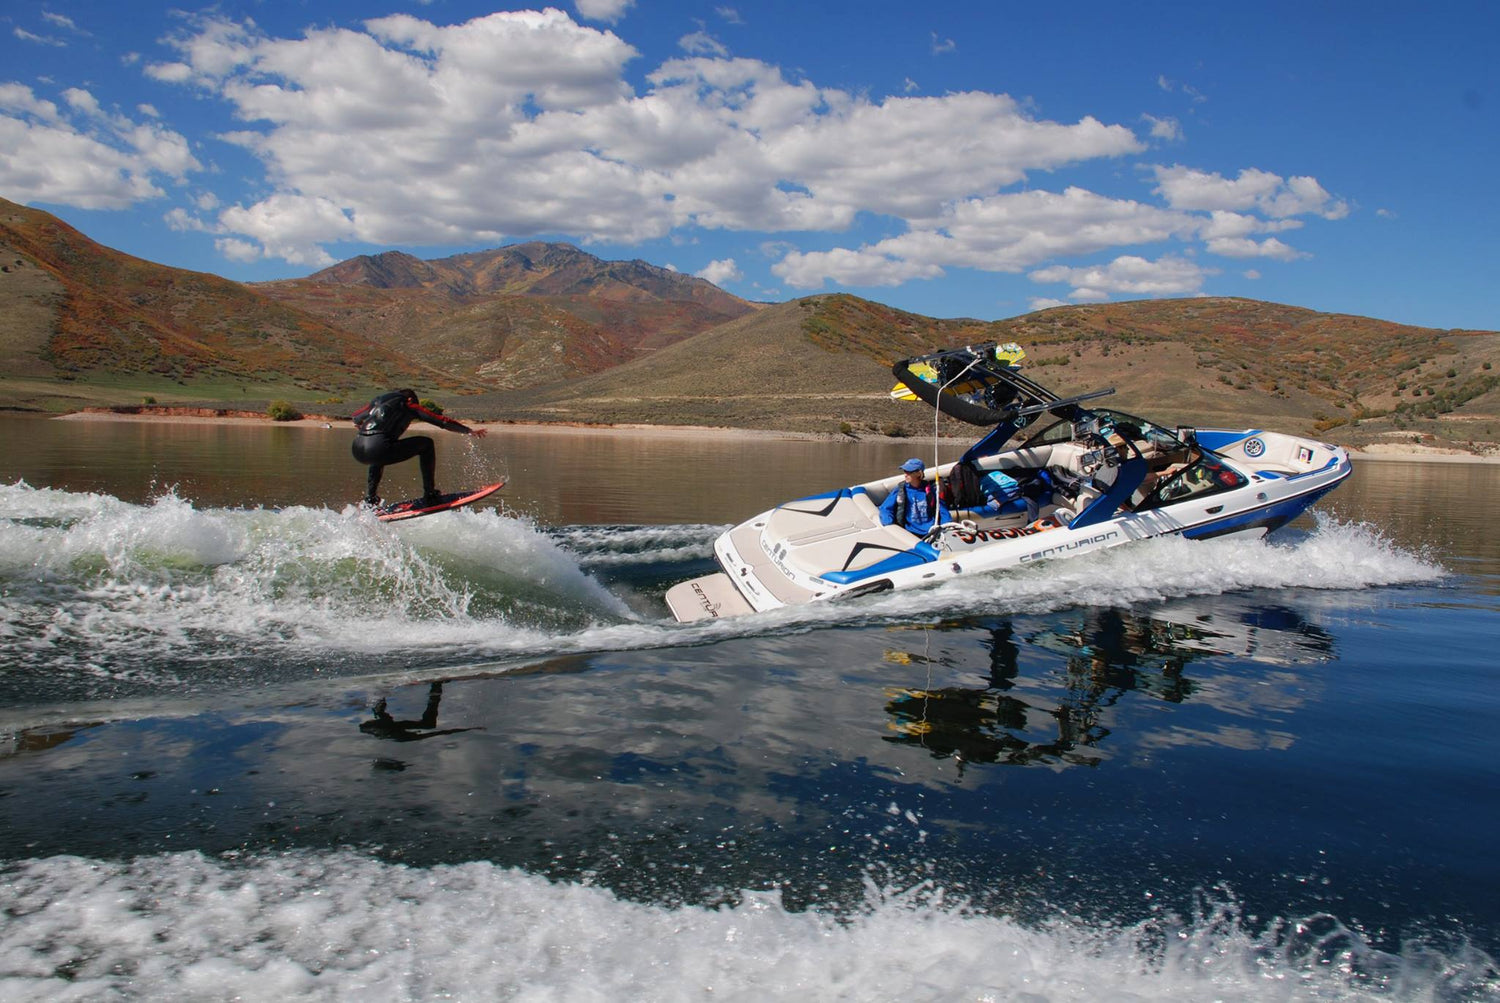 Wakesurf on a Centruion SV233 boat rental, Utah boat rentals or Lake Powell 